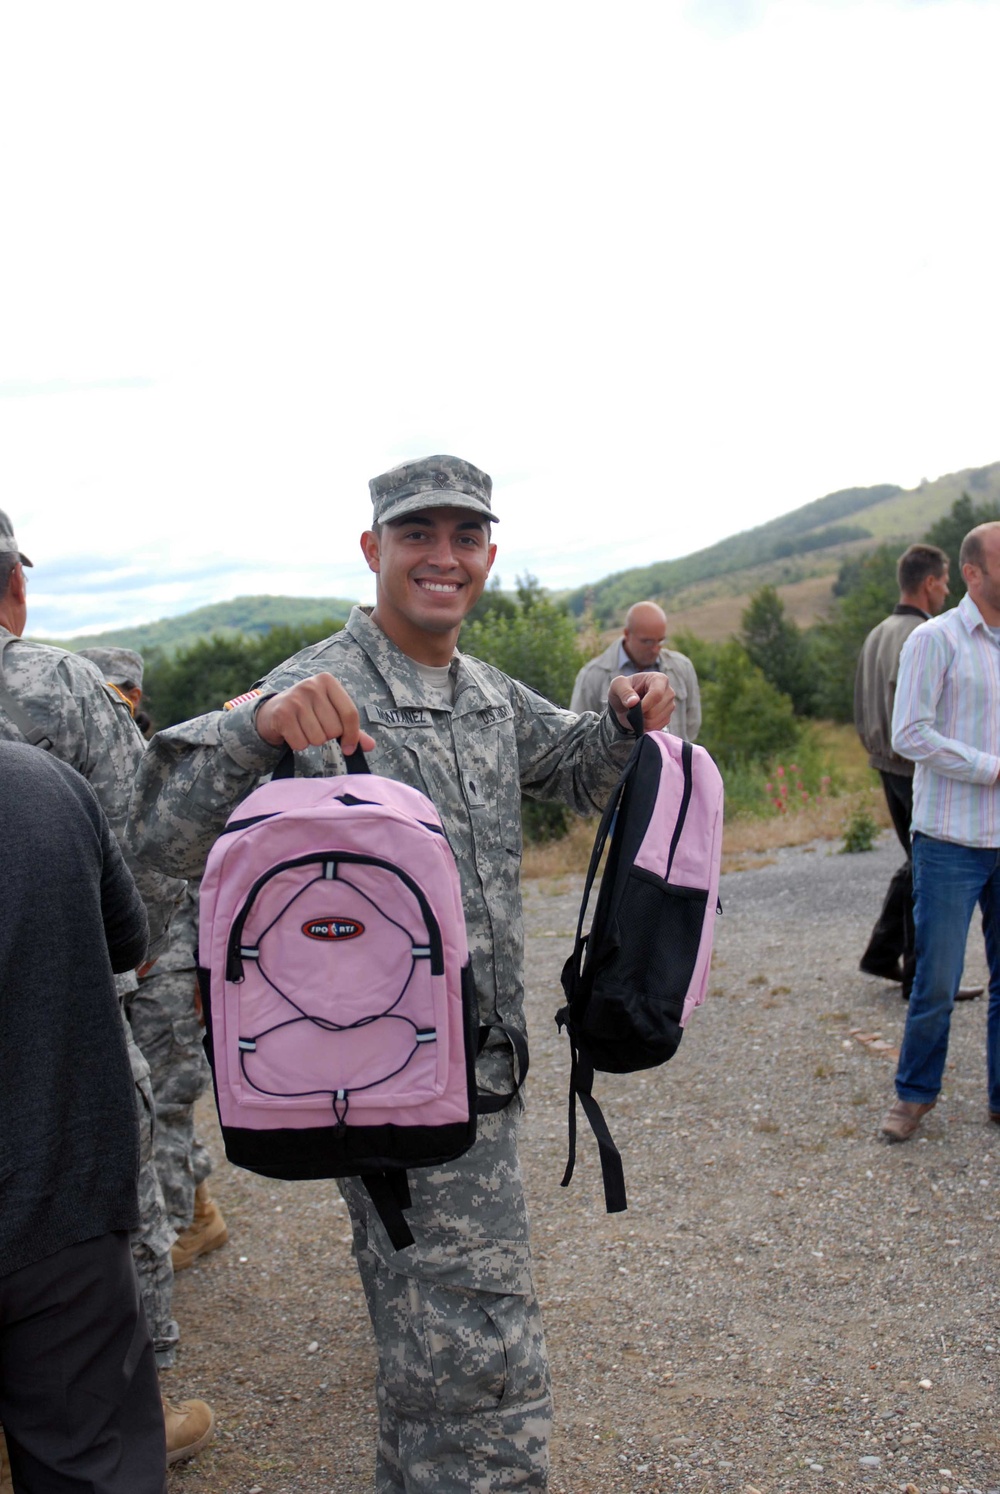 US Soldiers visit school children, donate school supplies